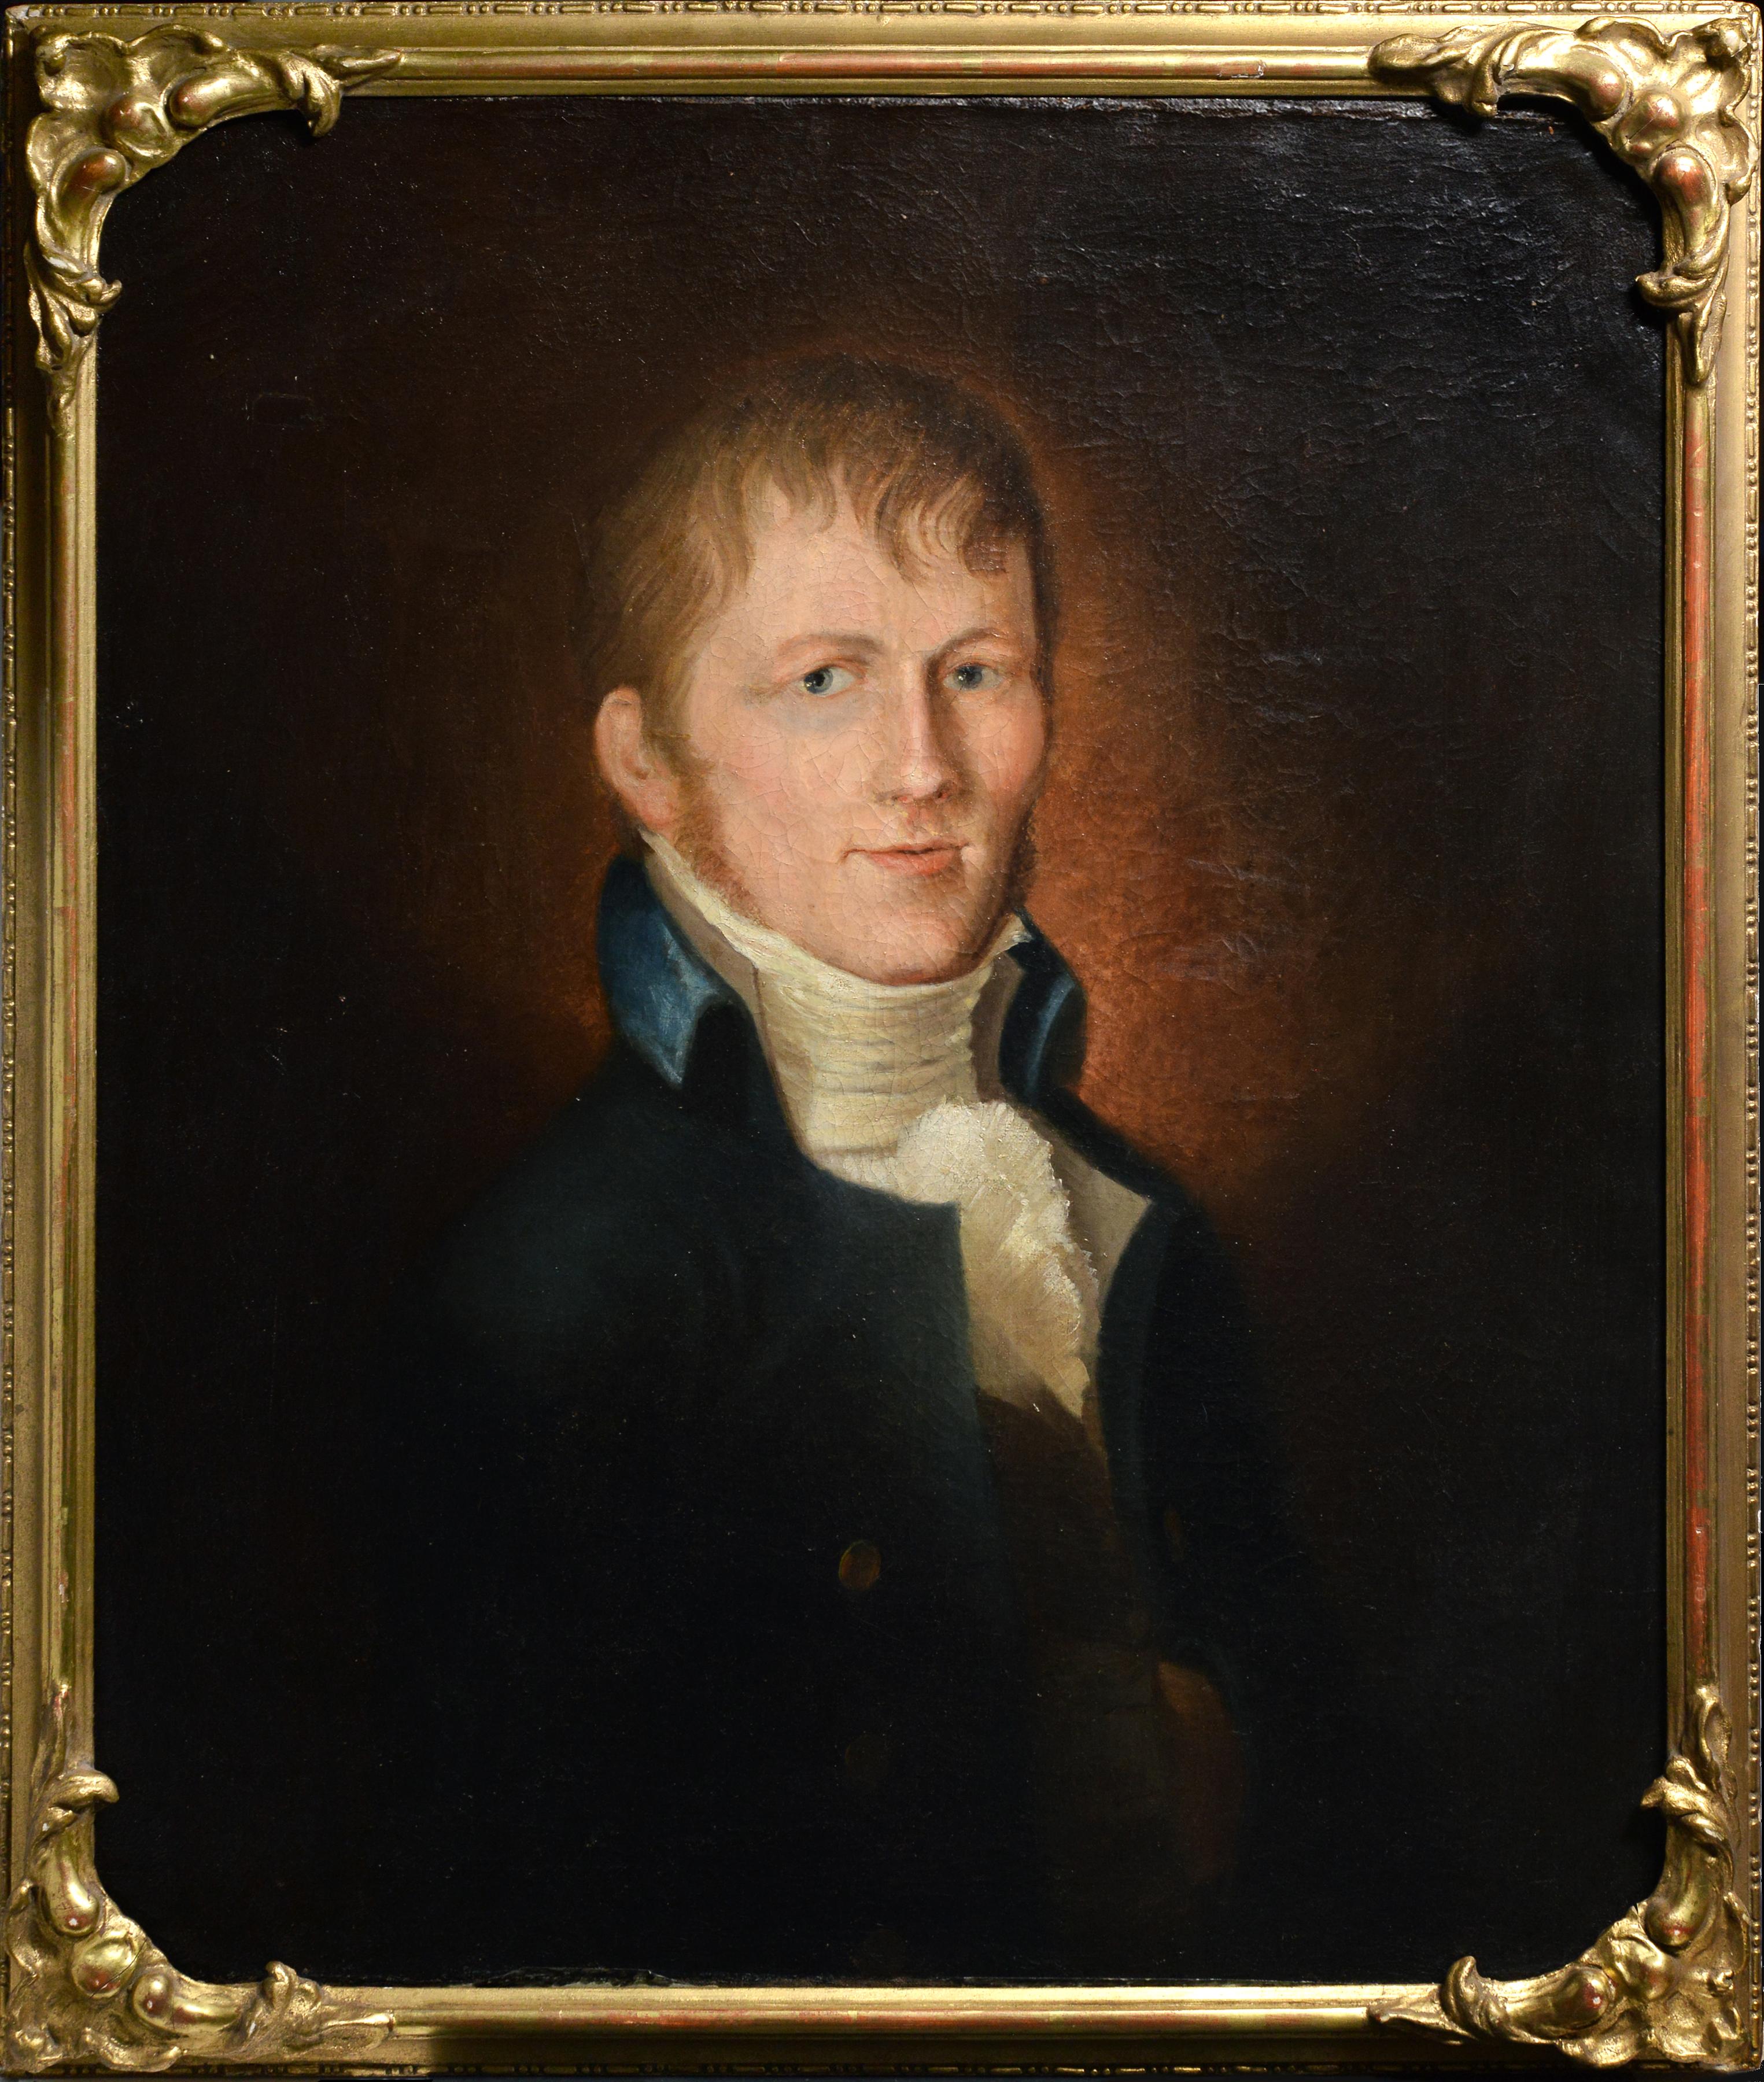 Young Gentleman Portrait by American Samuel Morse inventor of Telegraph Code 19C